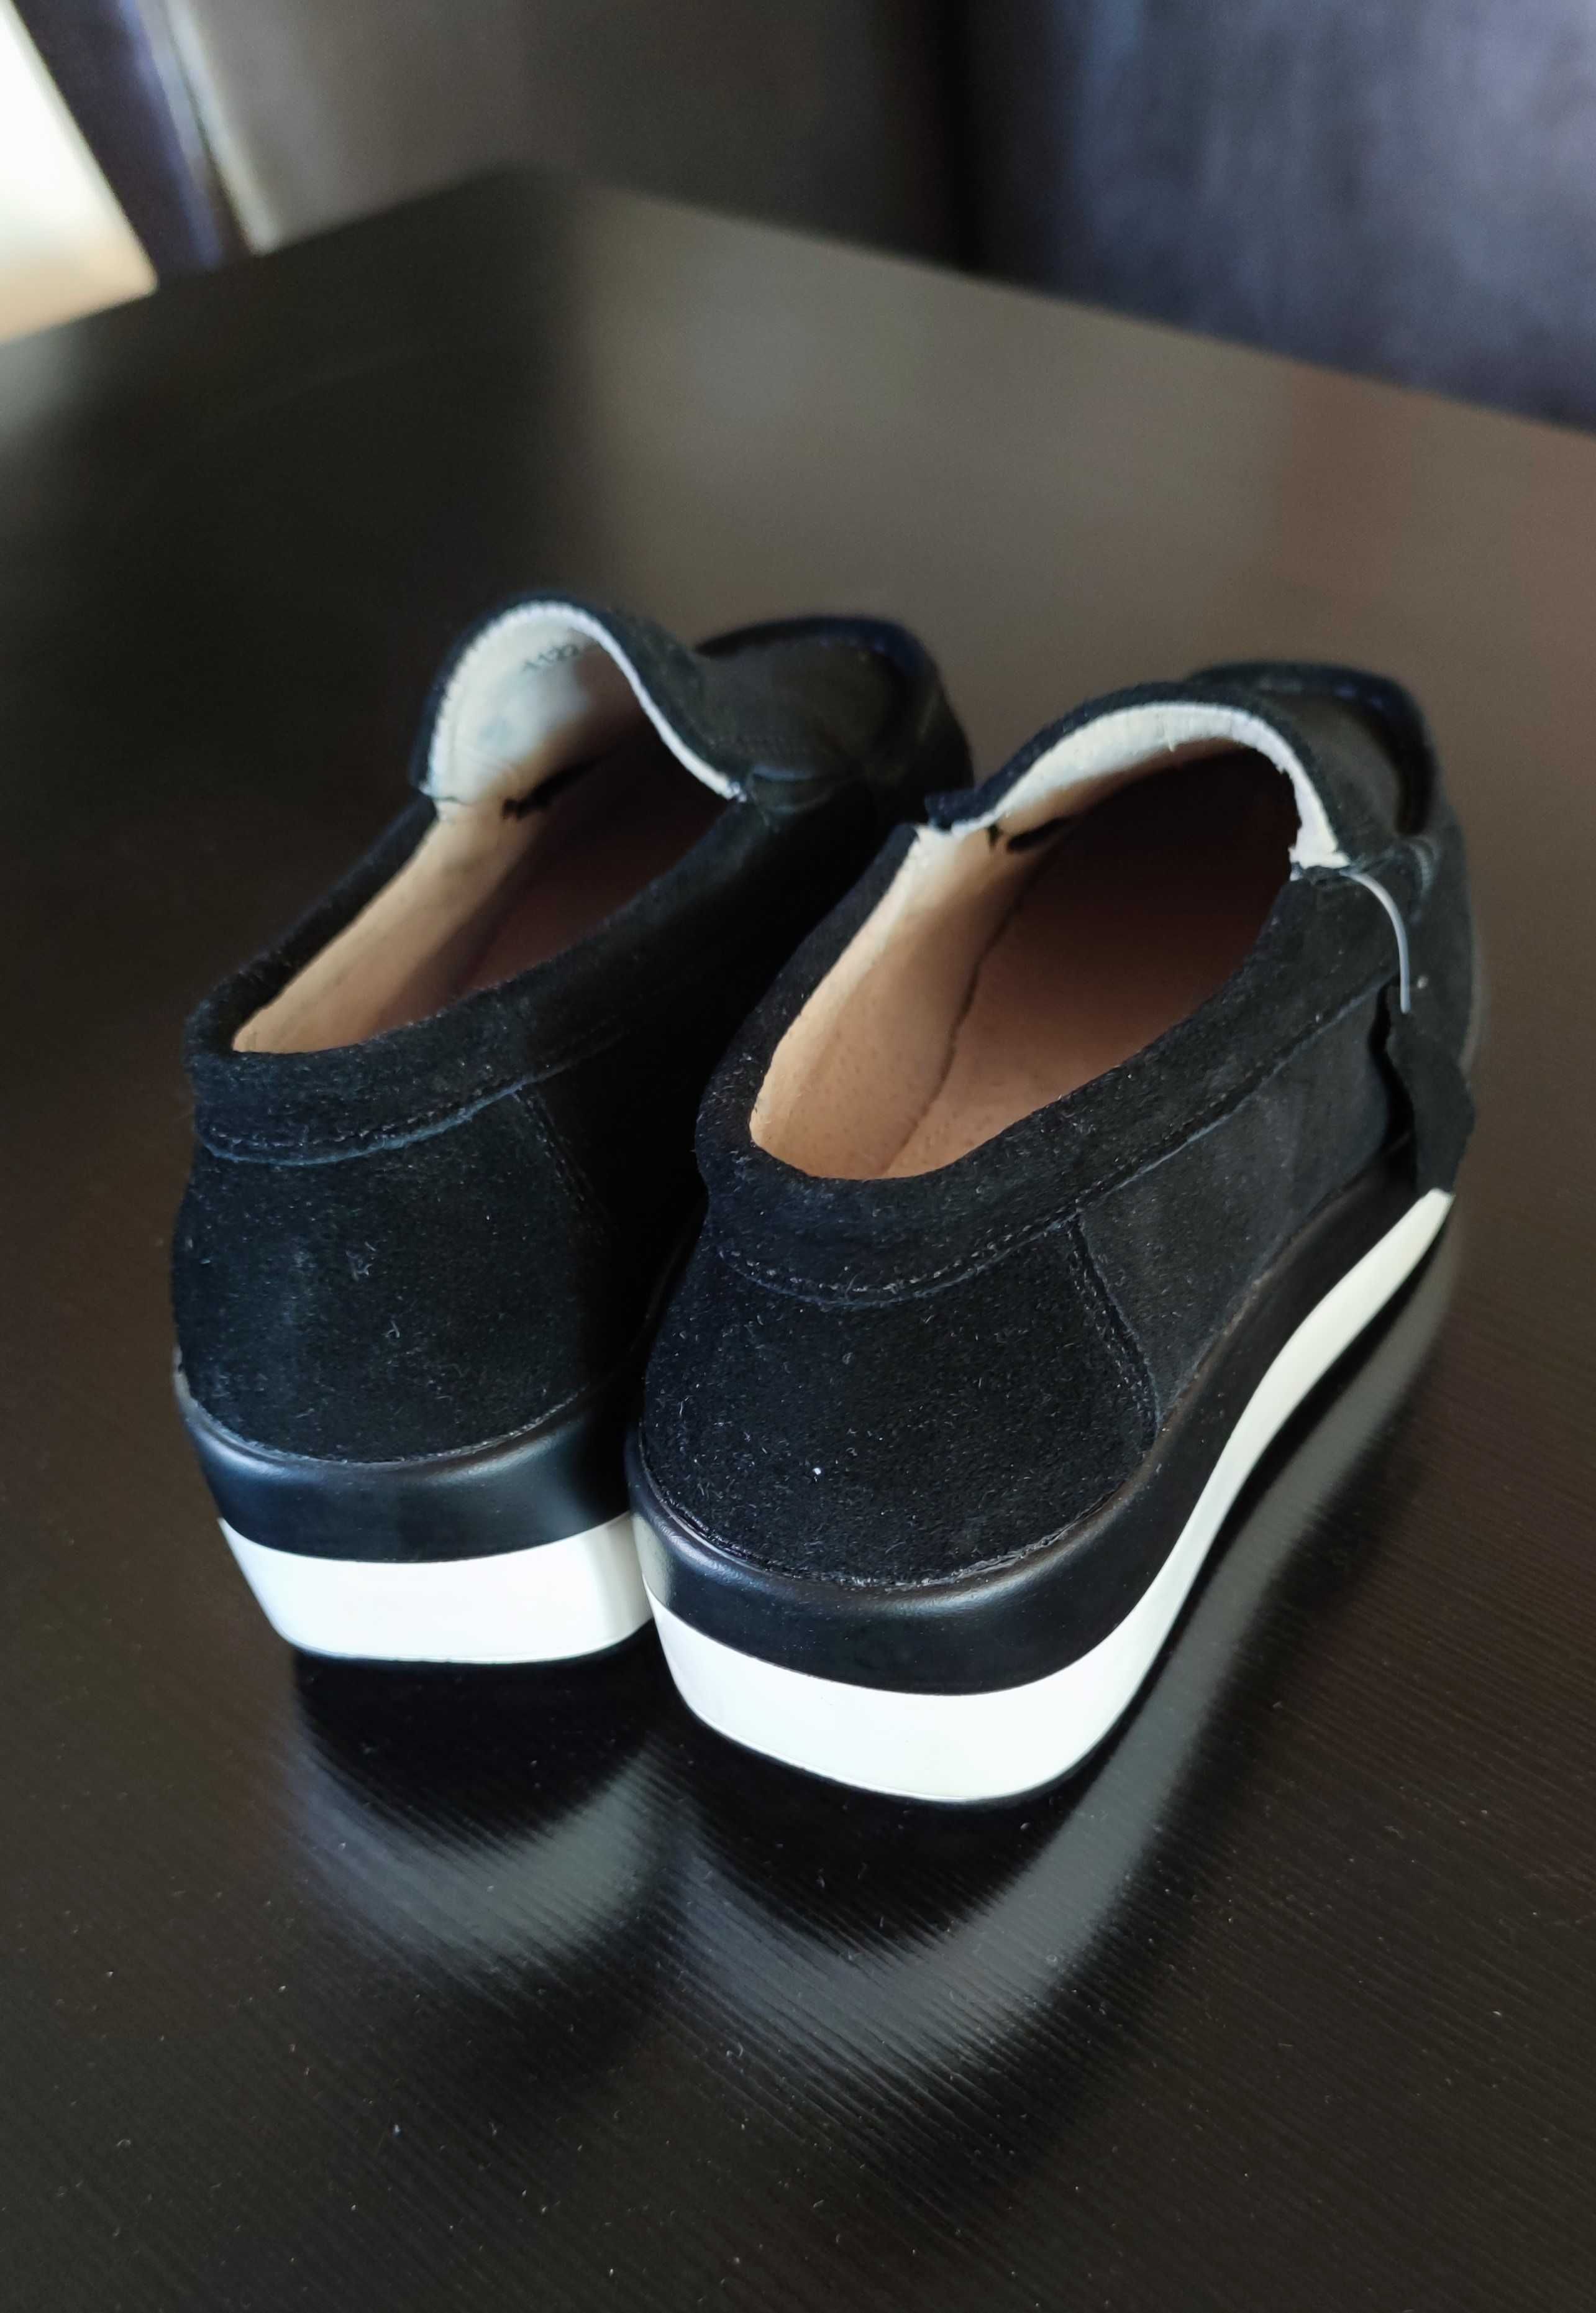 Pantofi piele naturala intoarsa culoare negru mar 38